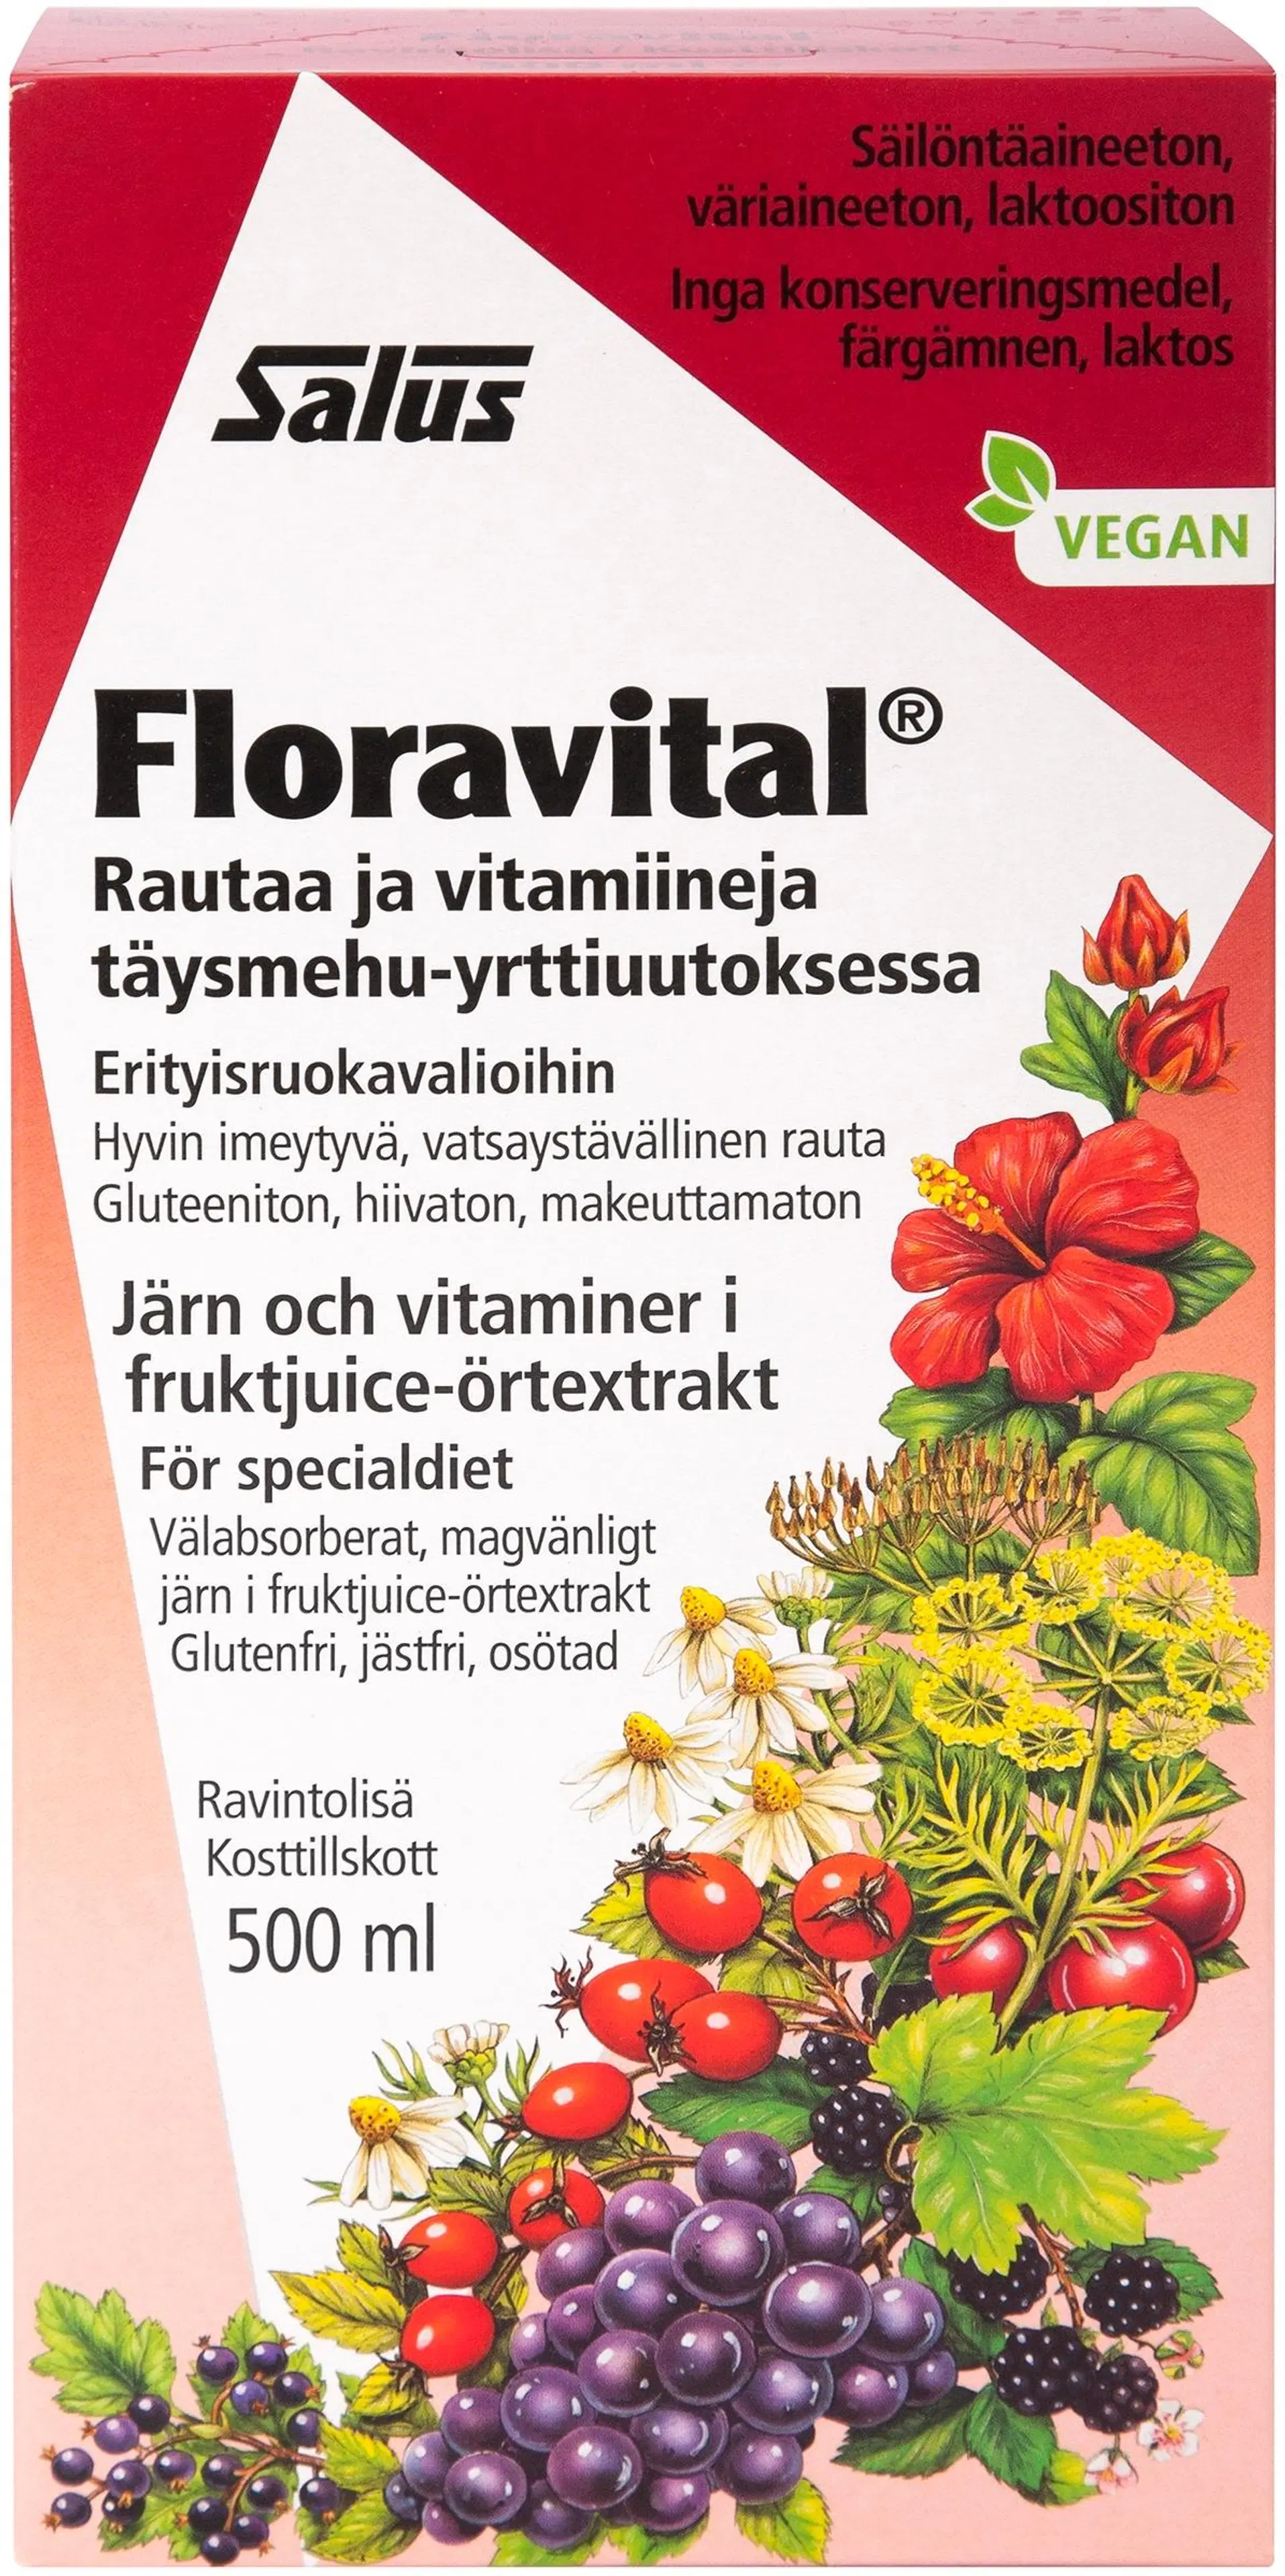 Salus Blutsaft Floravital rautaa ja vitamiineja täysmehu-yrttiuutoksessa 500ml